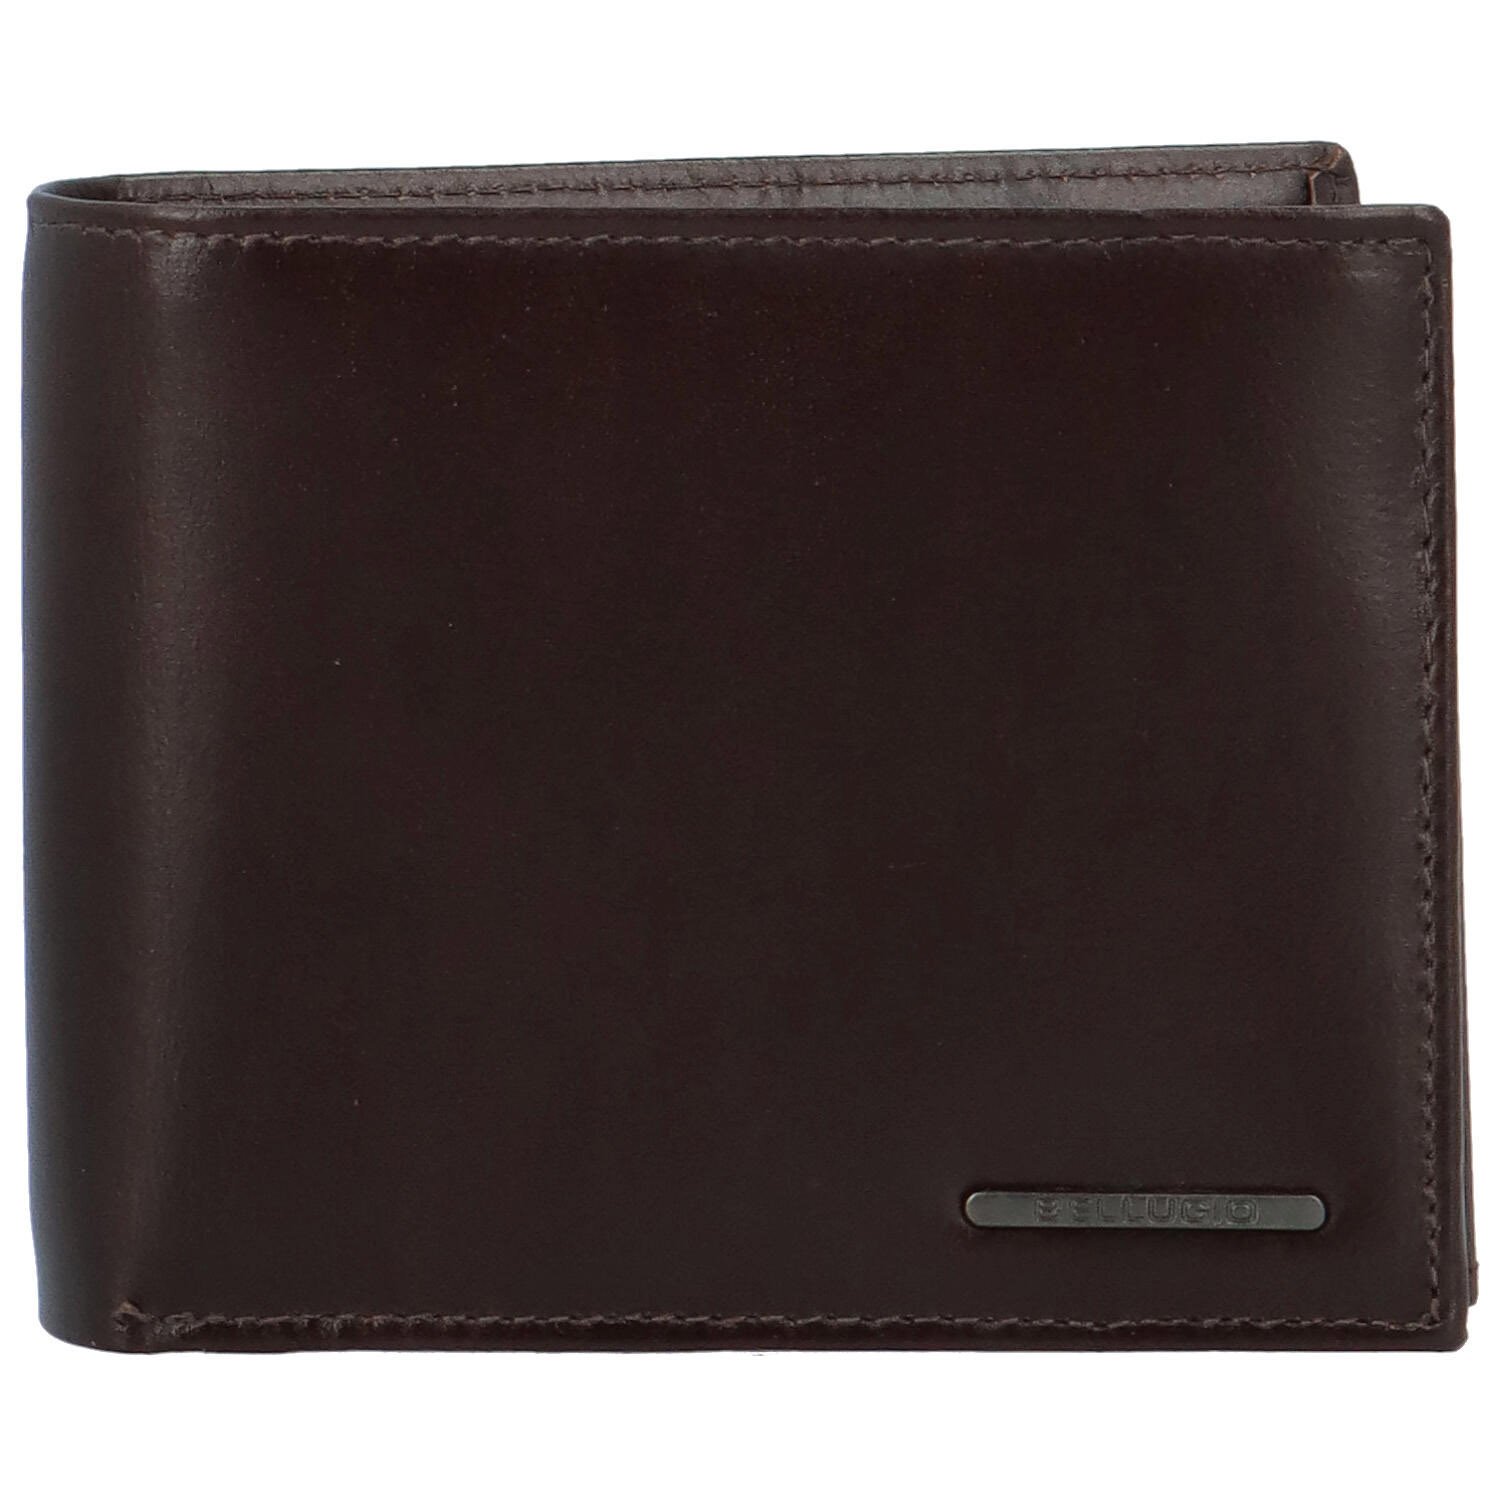 Pánská kožená peněženka hnědá - Bellugio Weron